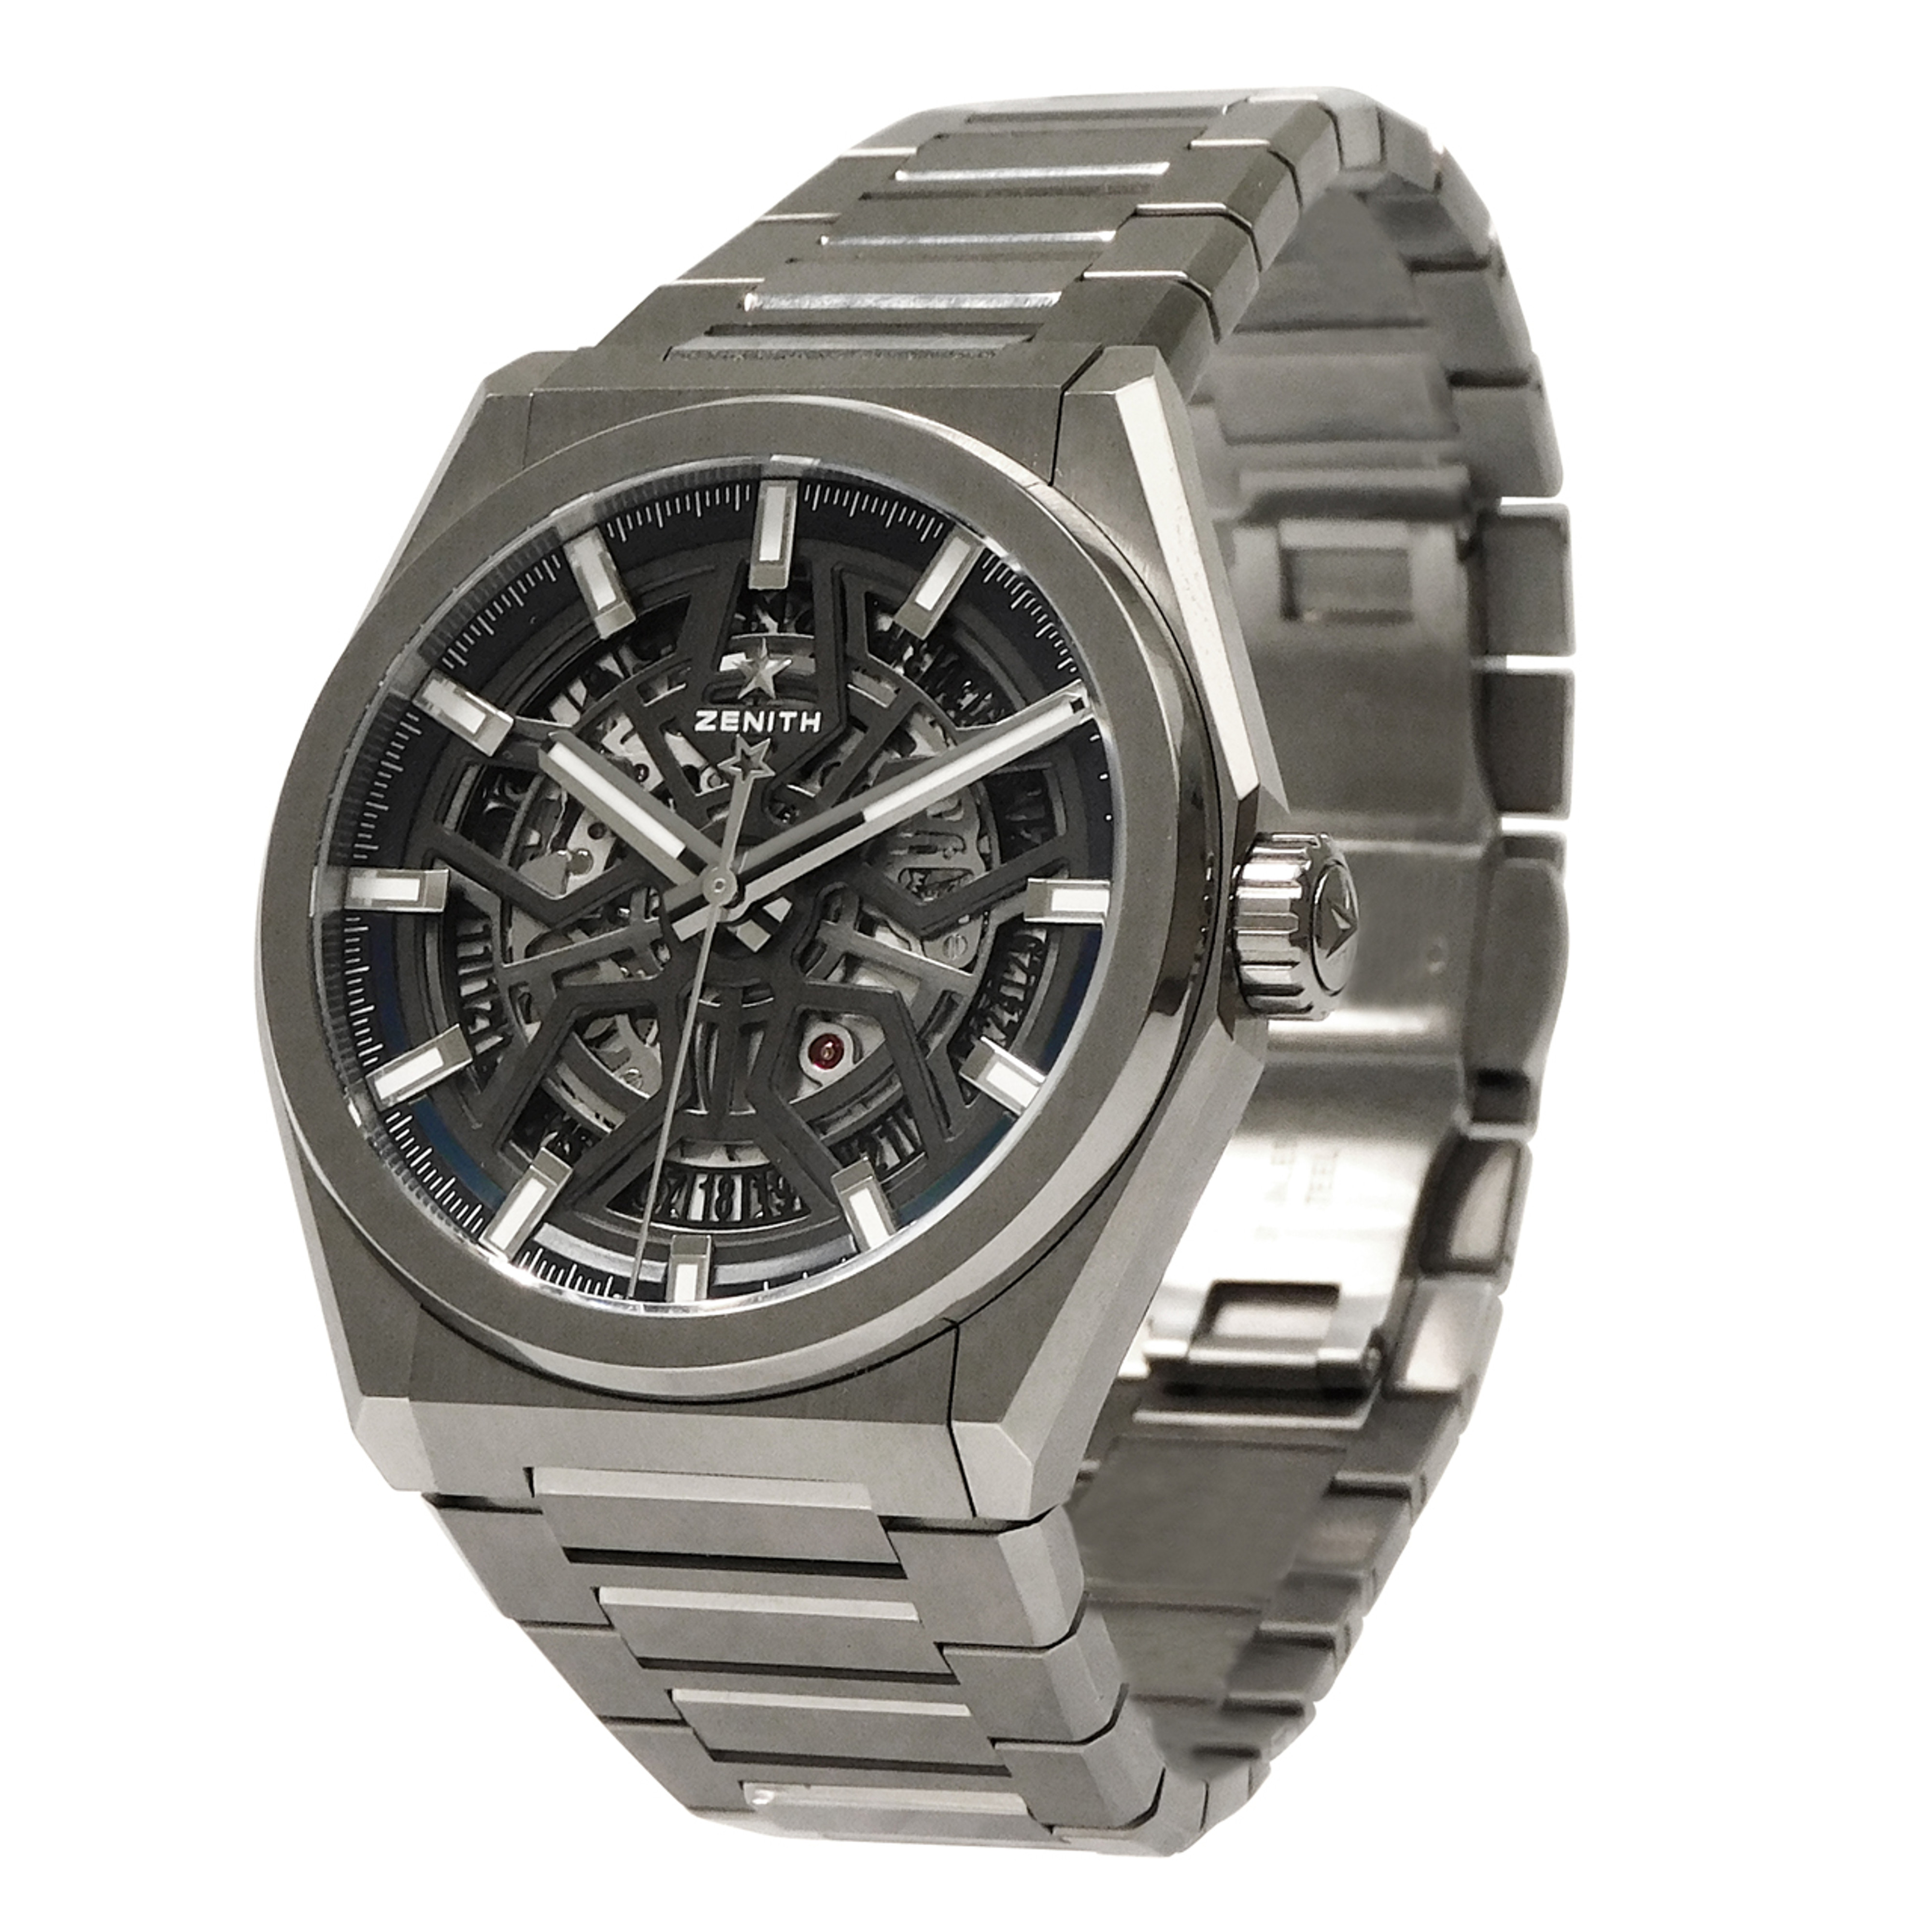 Zenith Defy Classic Titanium Watch for Sale Online - Biel Watches